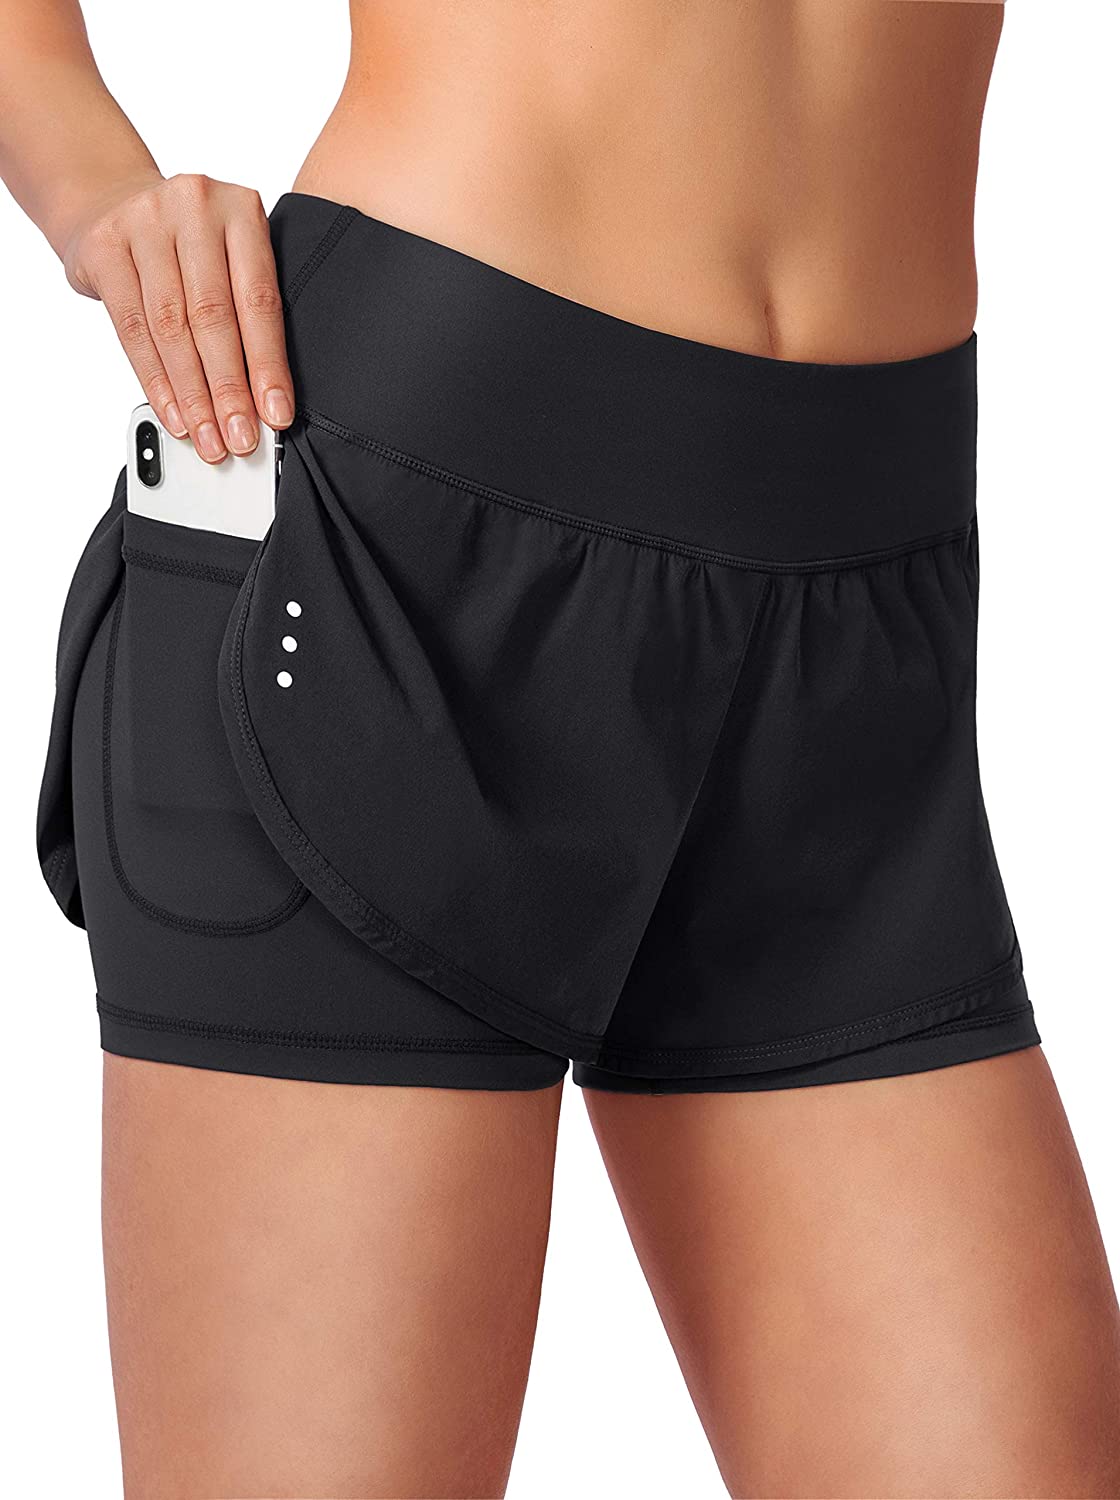 Black adam & eesa Ladies Girls Cotton Gym Cycle Dance Running Hotpants Yoga Shorts Size L-10 